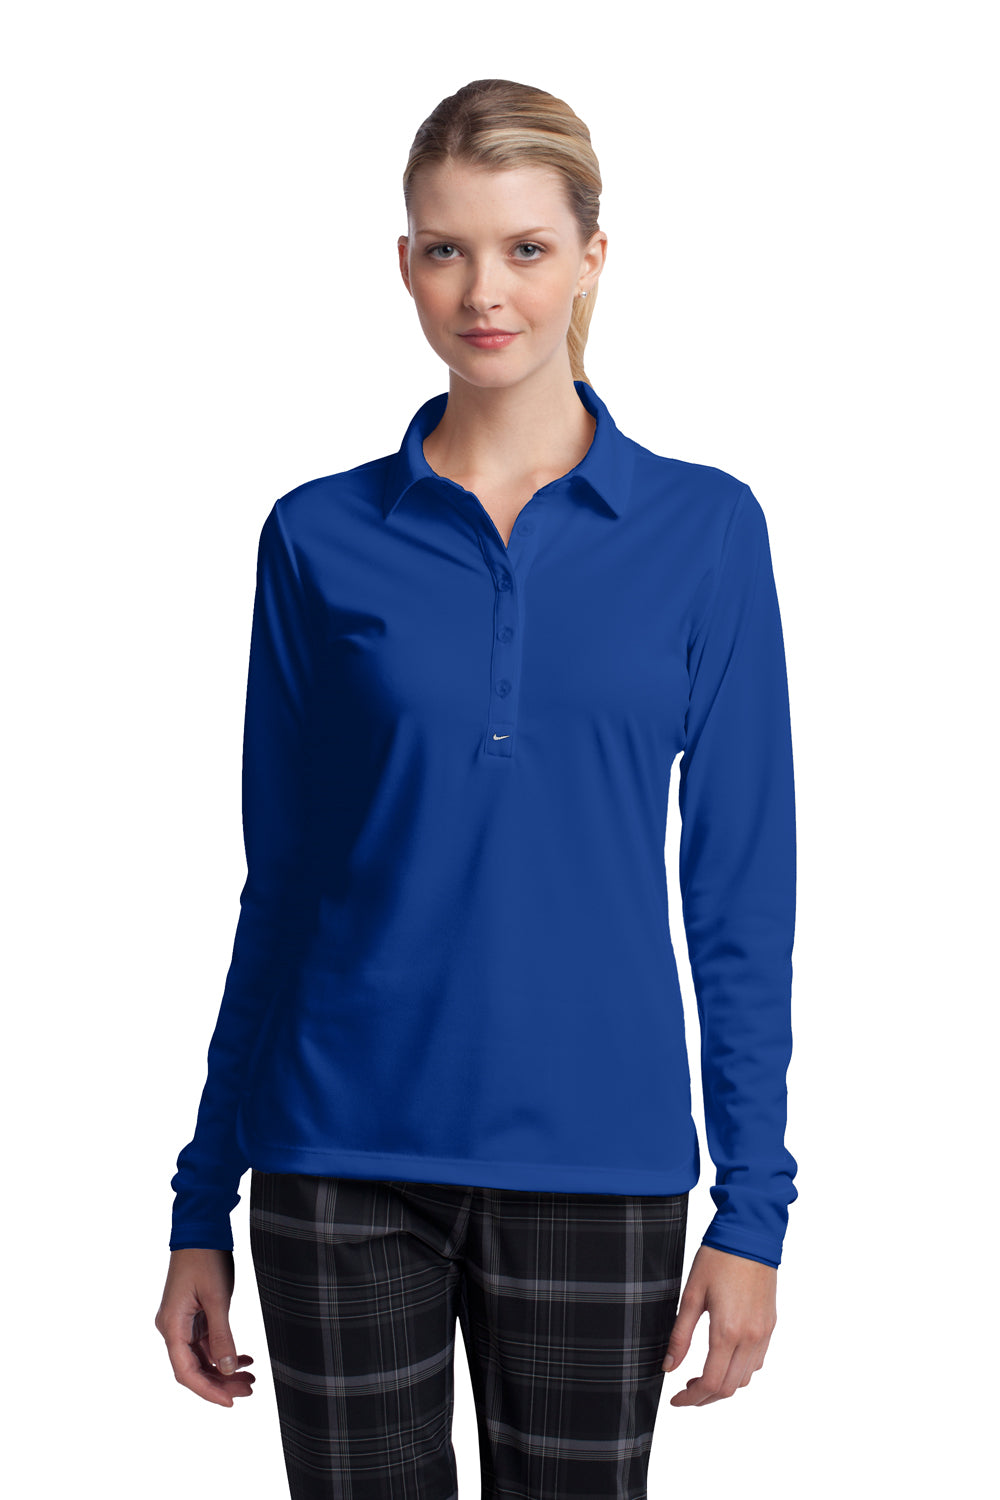 Nike 545322 Womens Stretch Tech Dri-Fit Moisture Wicking Long Sleeve Polo Shirt Sapphire Blue Model Front